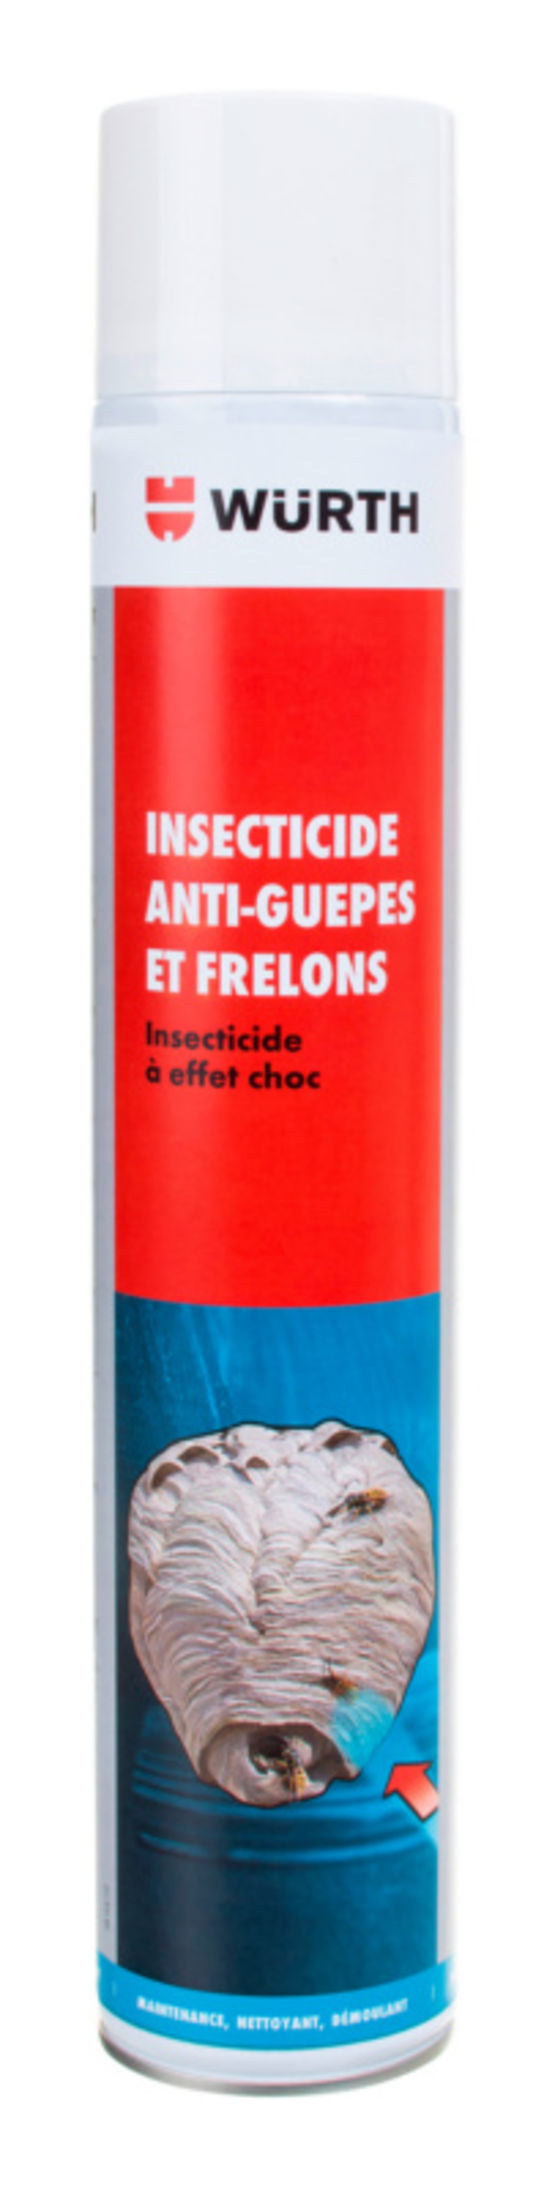 Insecticide-anti-guêpes-et-frelons.jpeg